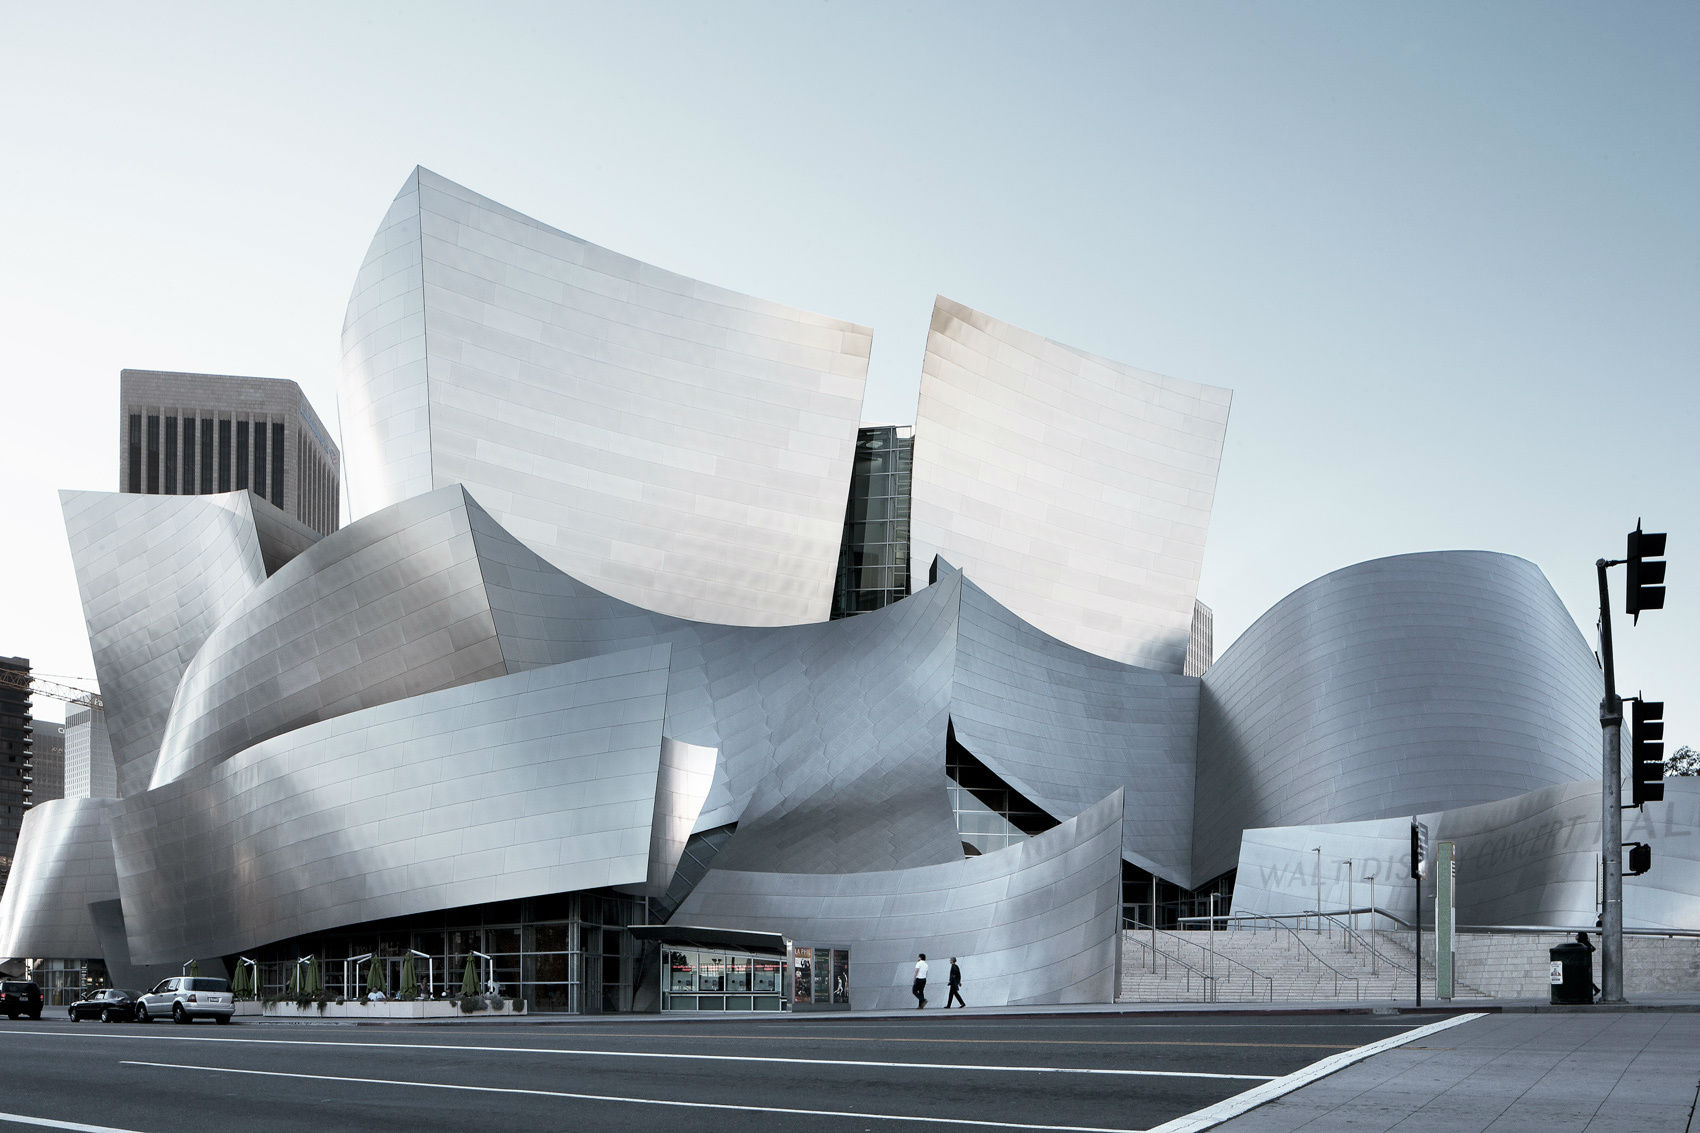 Walt Disney concert hall by Frank Gehry